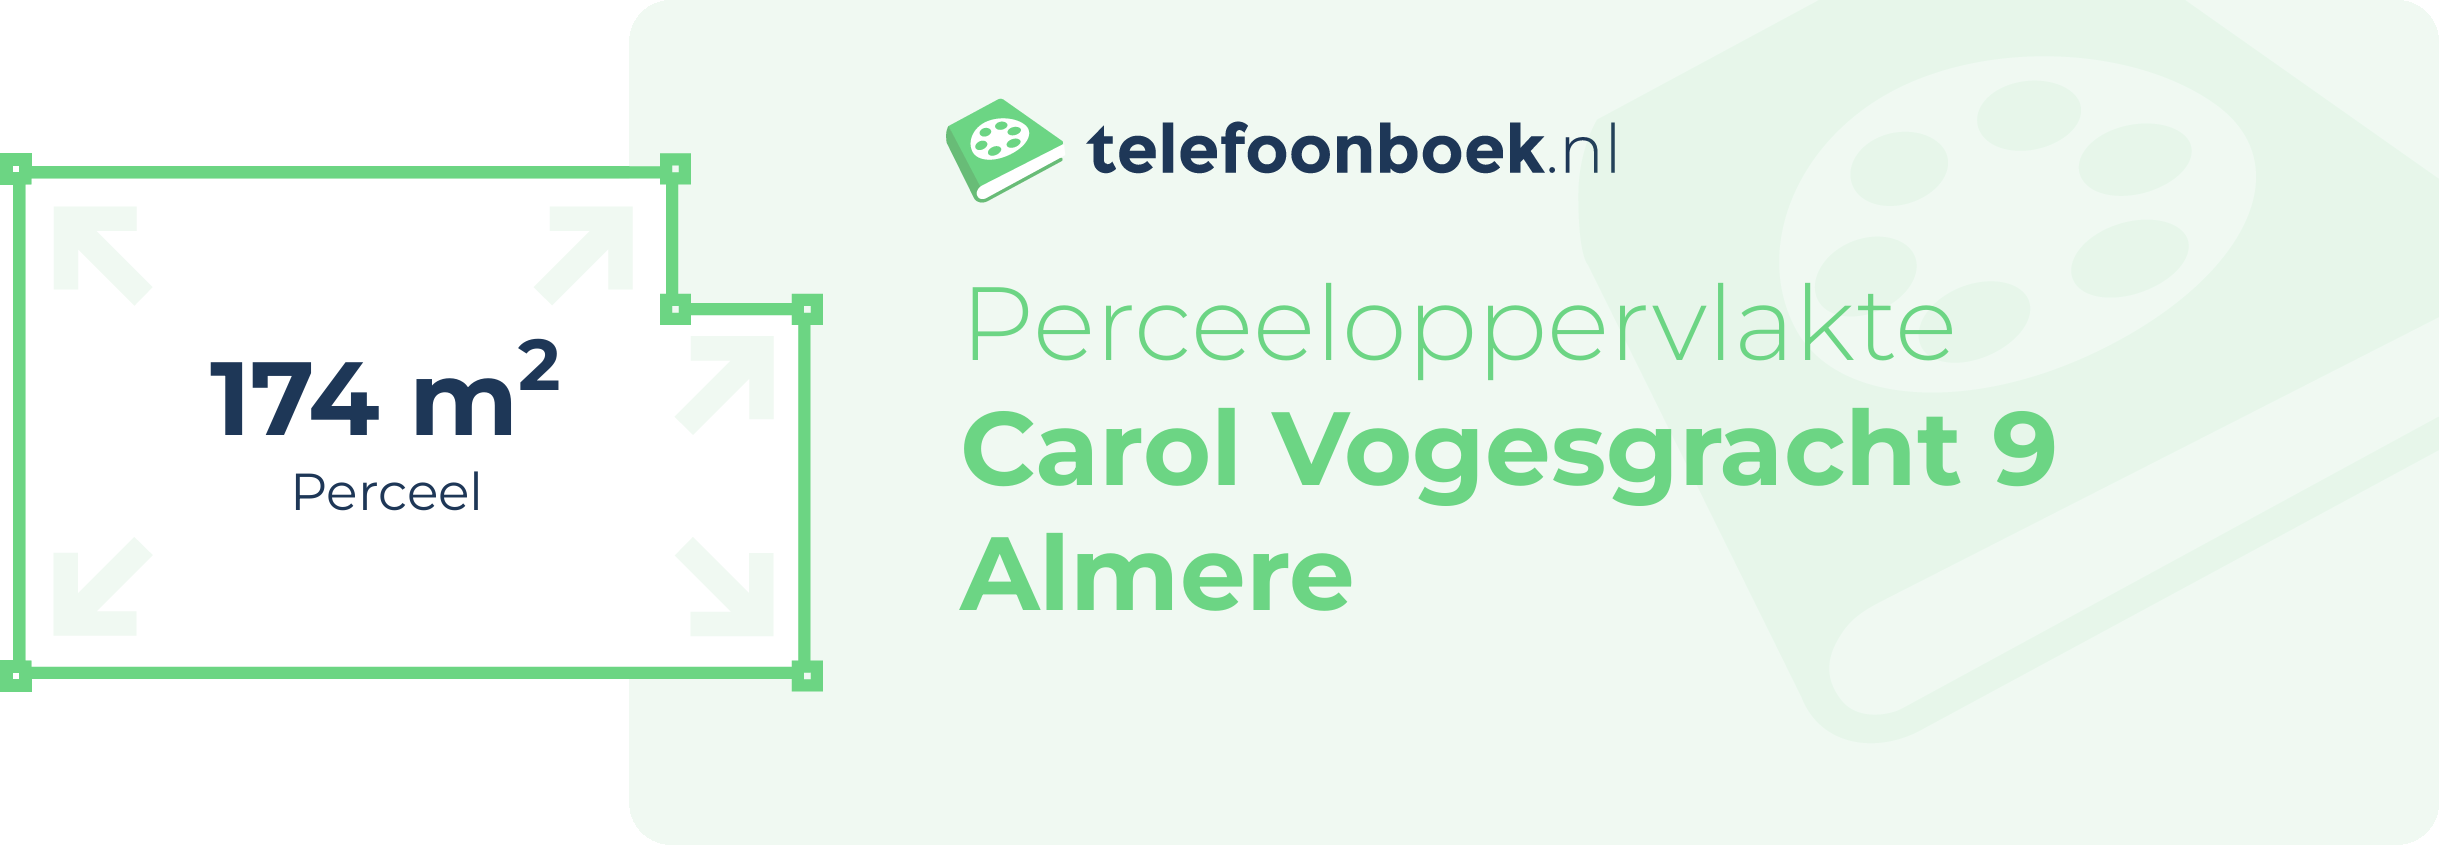 Perceeloppervlakte Carol Vogesgracht 9 Almere